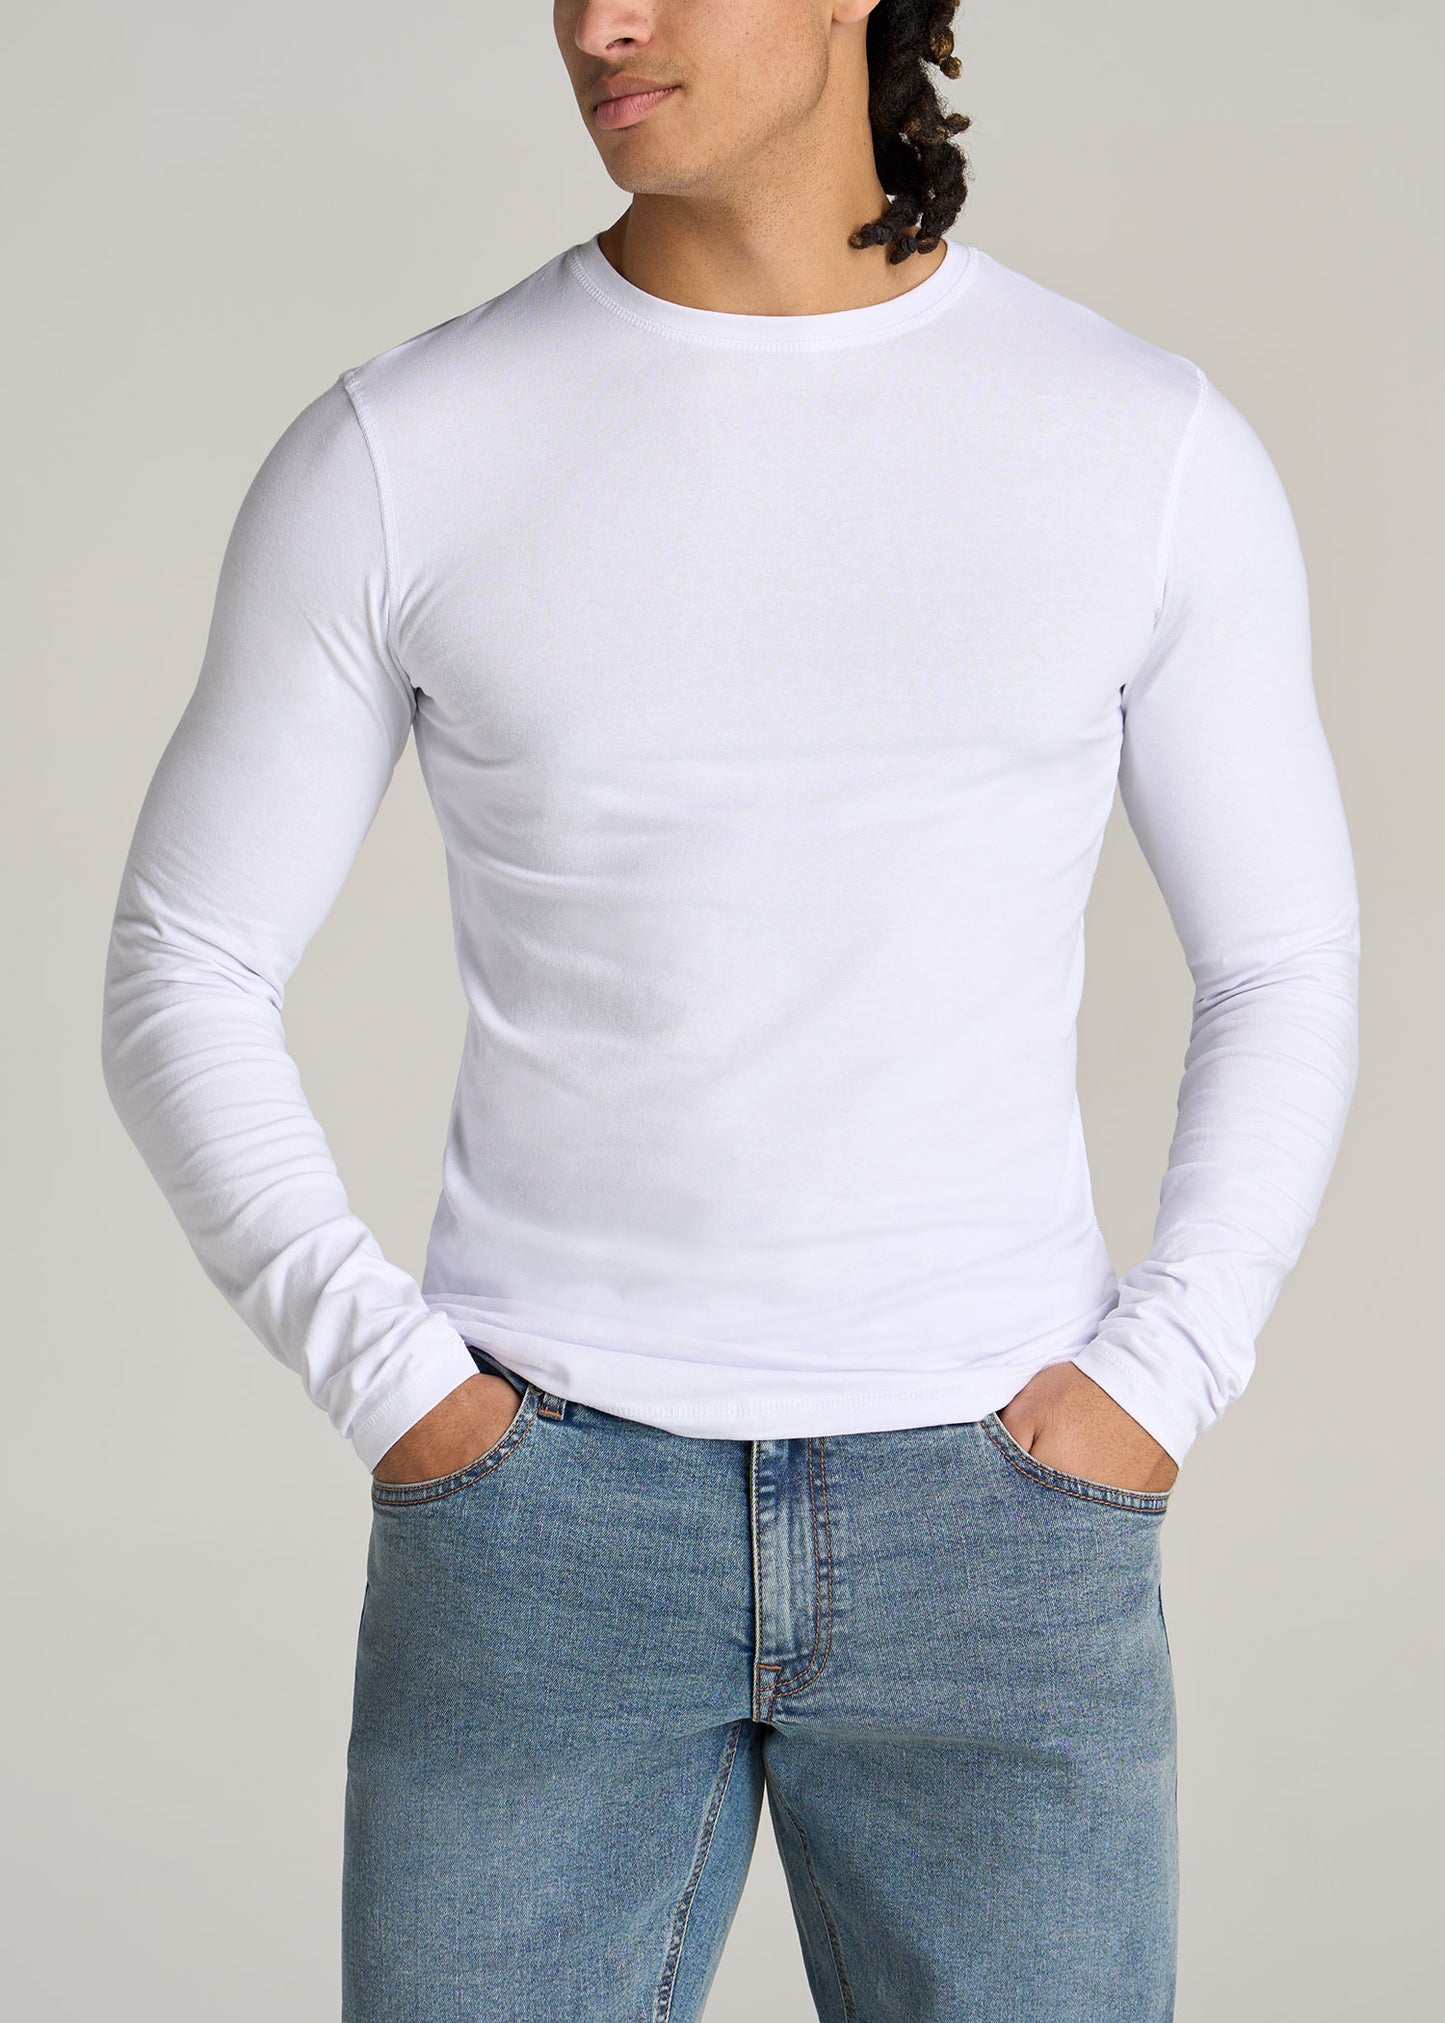 Men's Easy Care Stretch Slim-Fit Long-Sleeve Shirt | Blue | XL | Uniqlo US